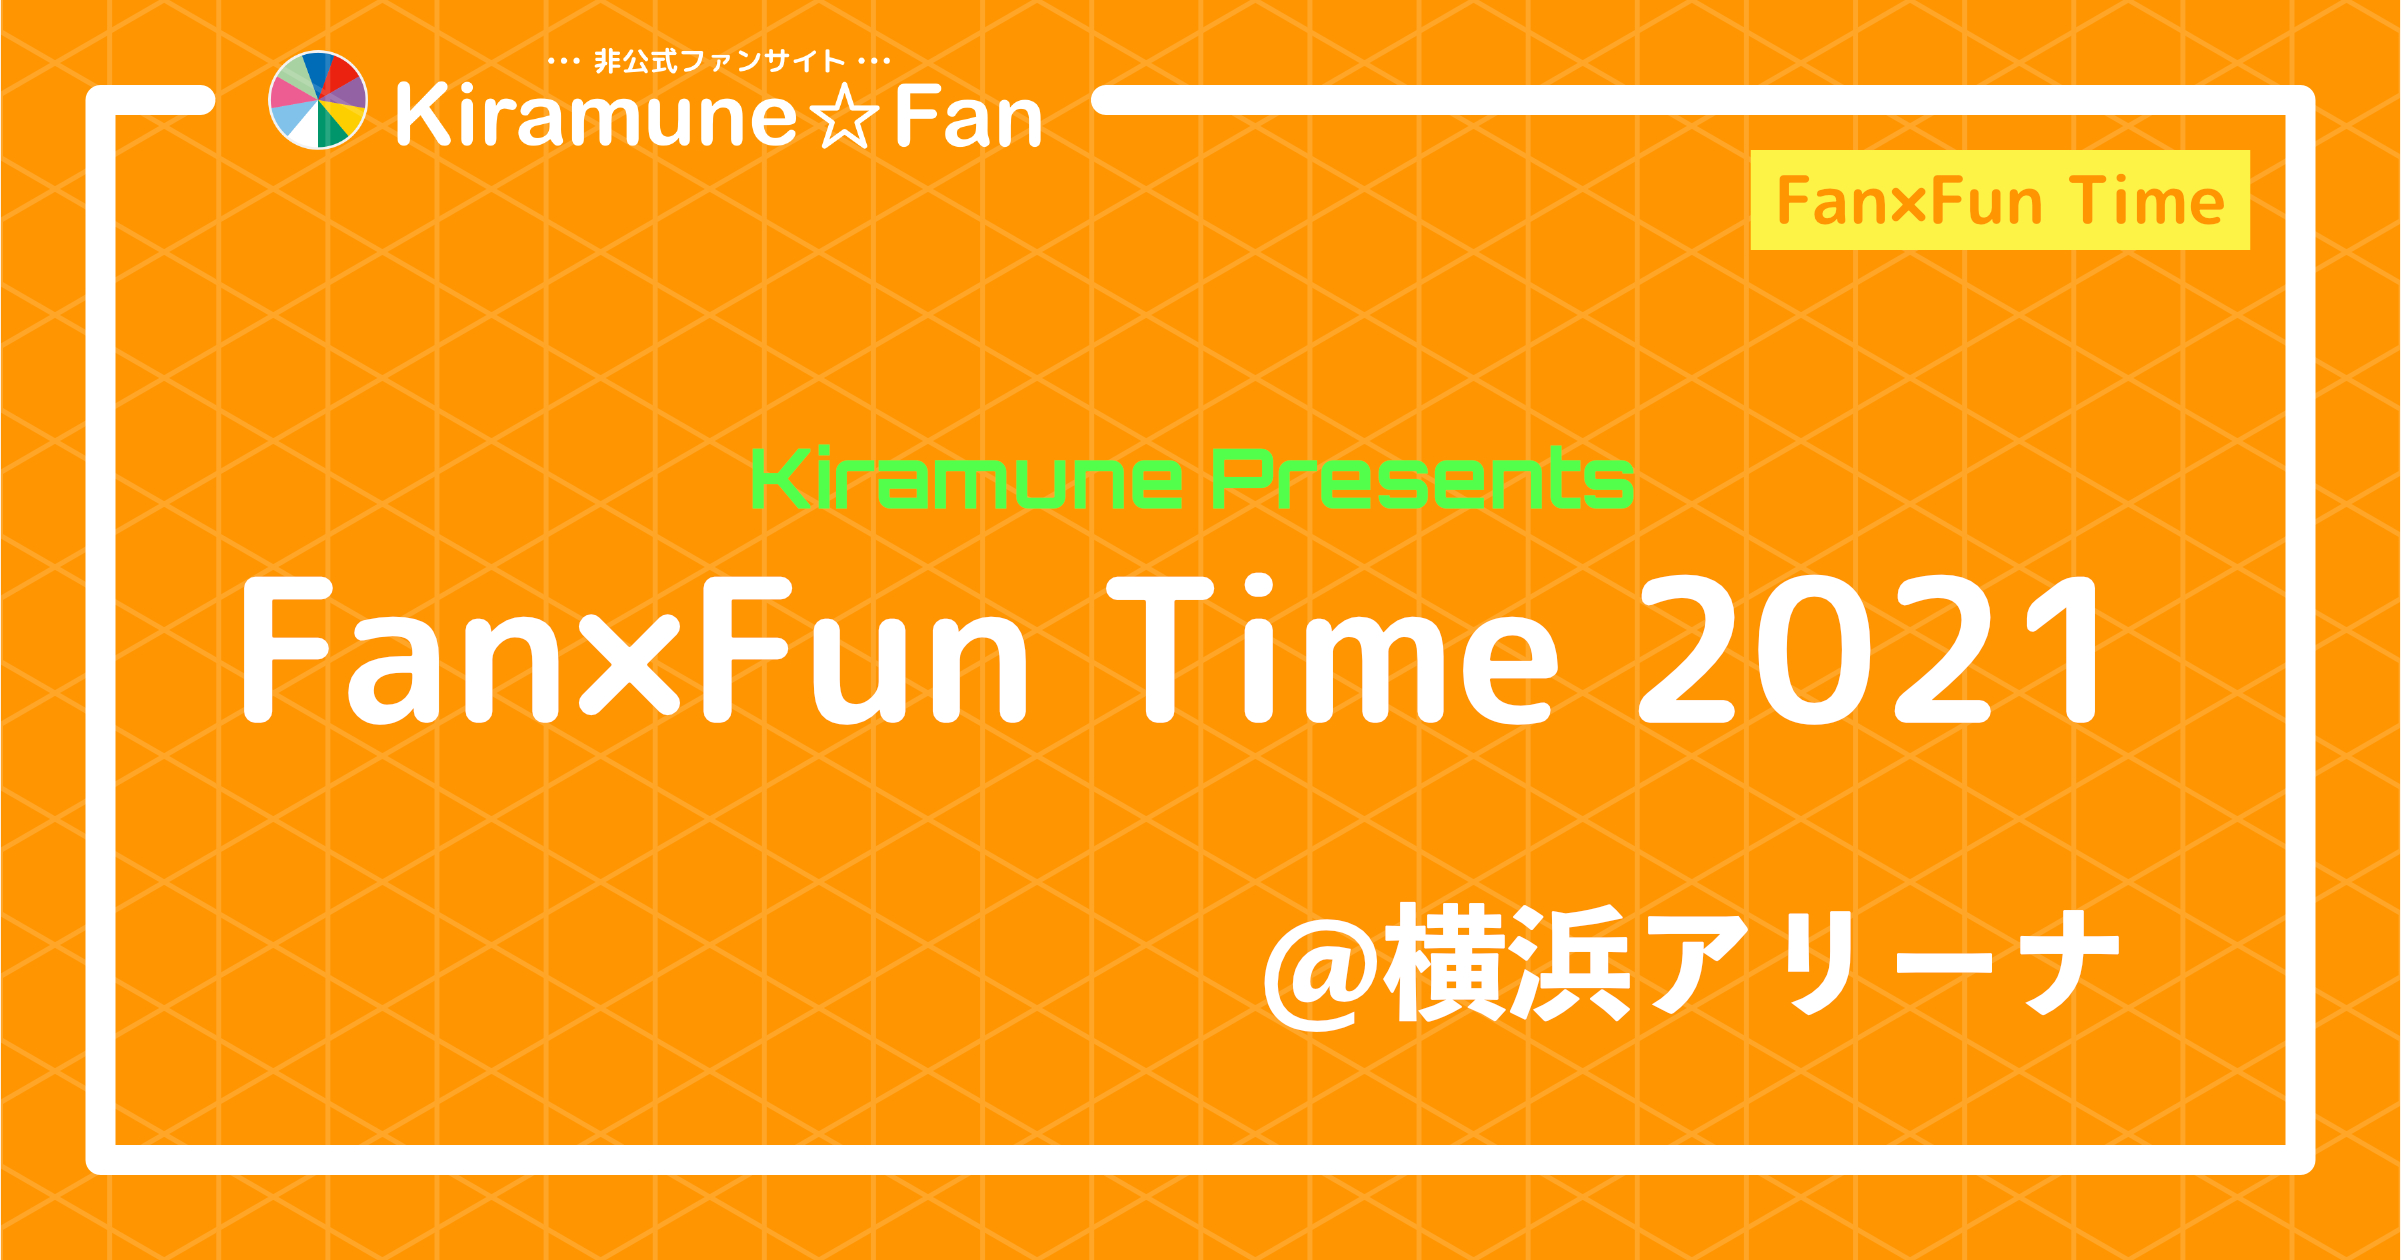 Kiramune Presents Fan×Fun Time 2021 | Kiramune☆Fan